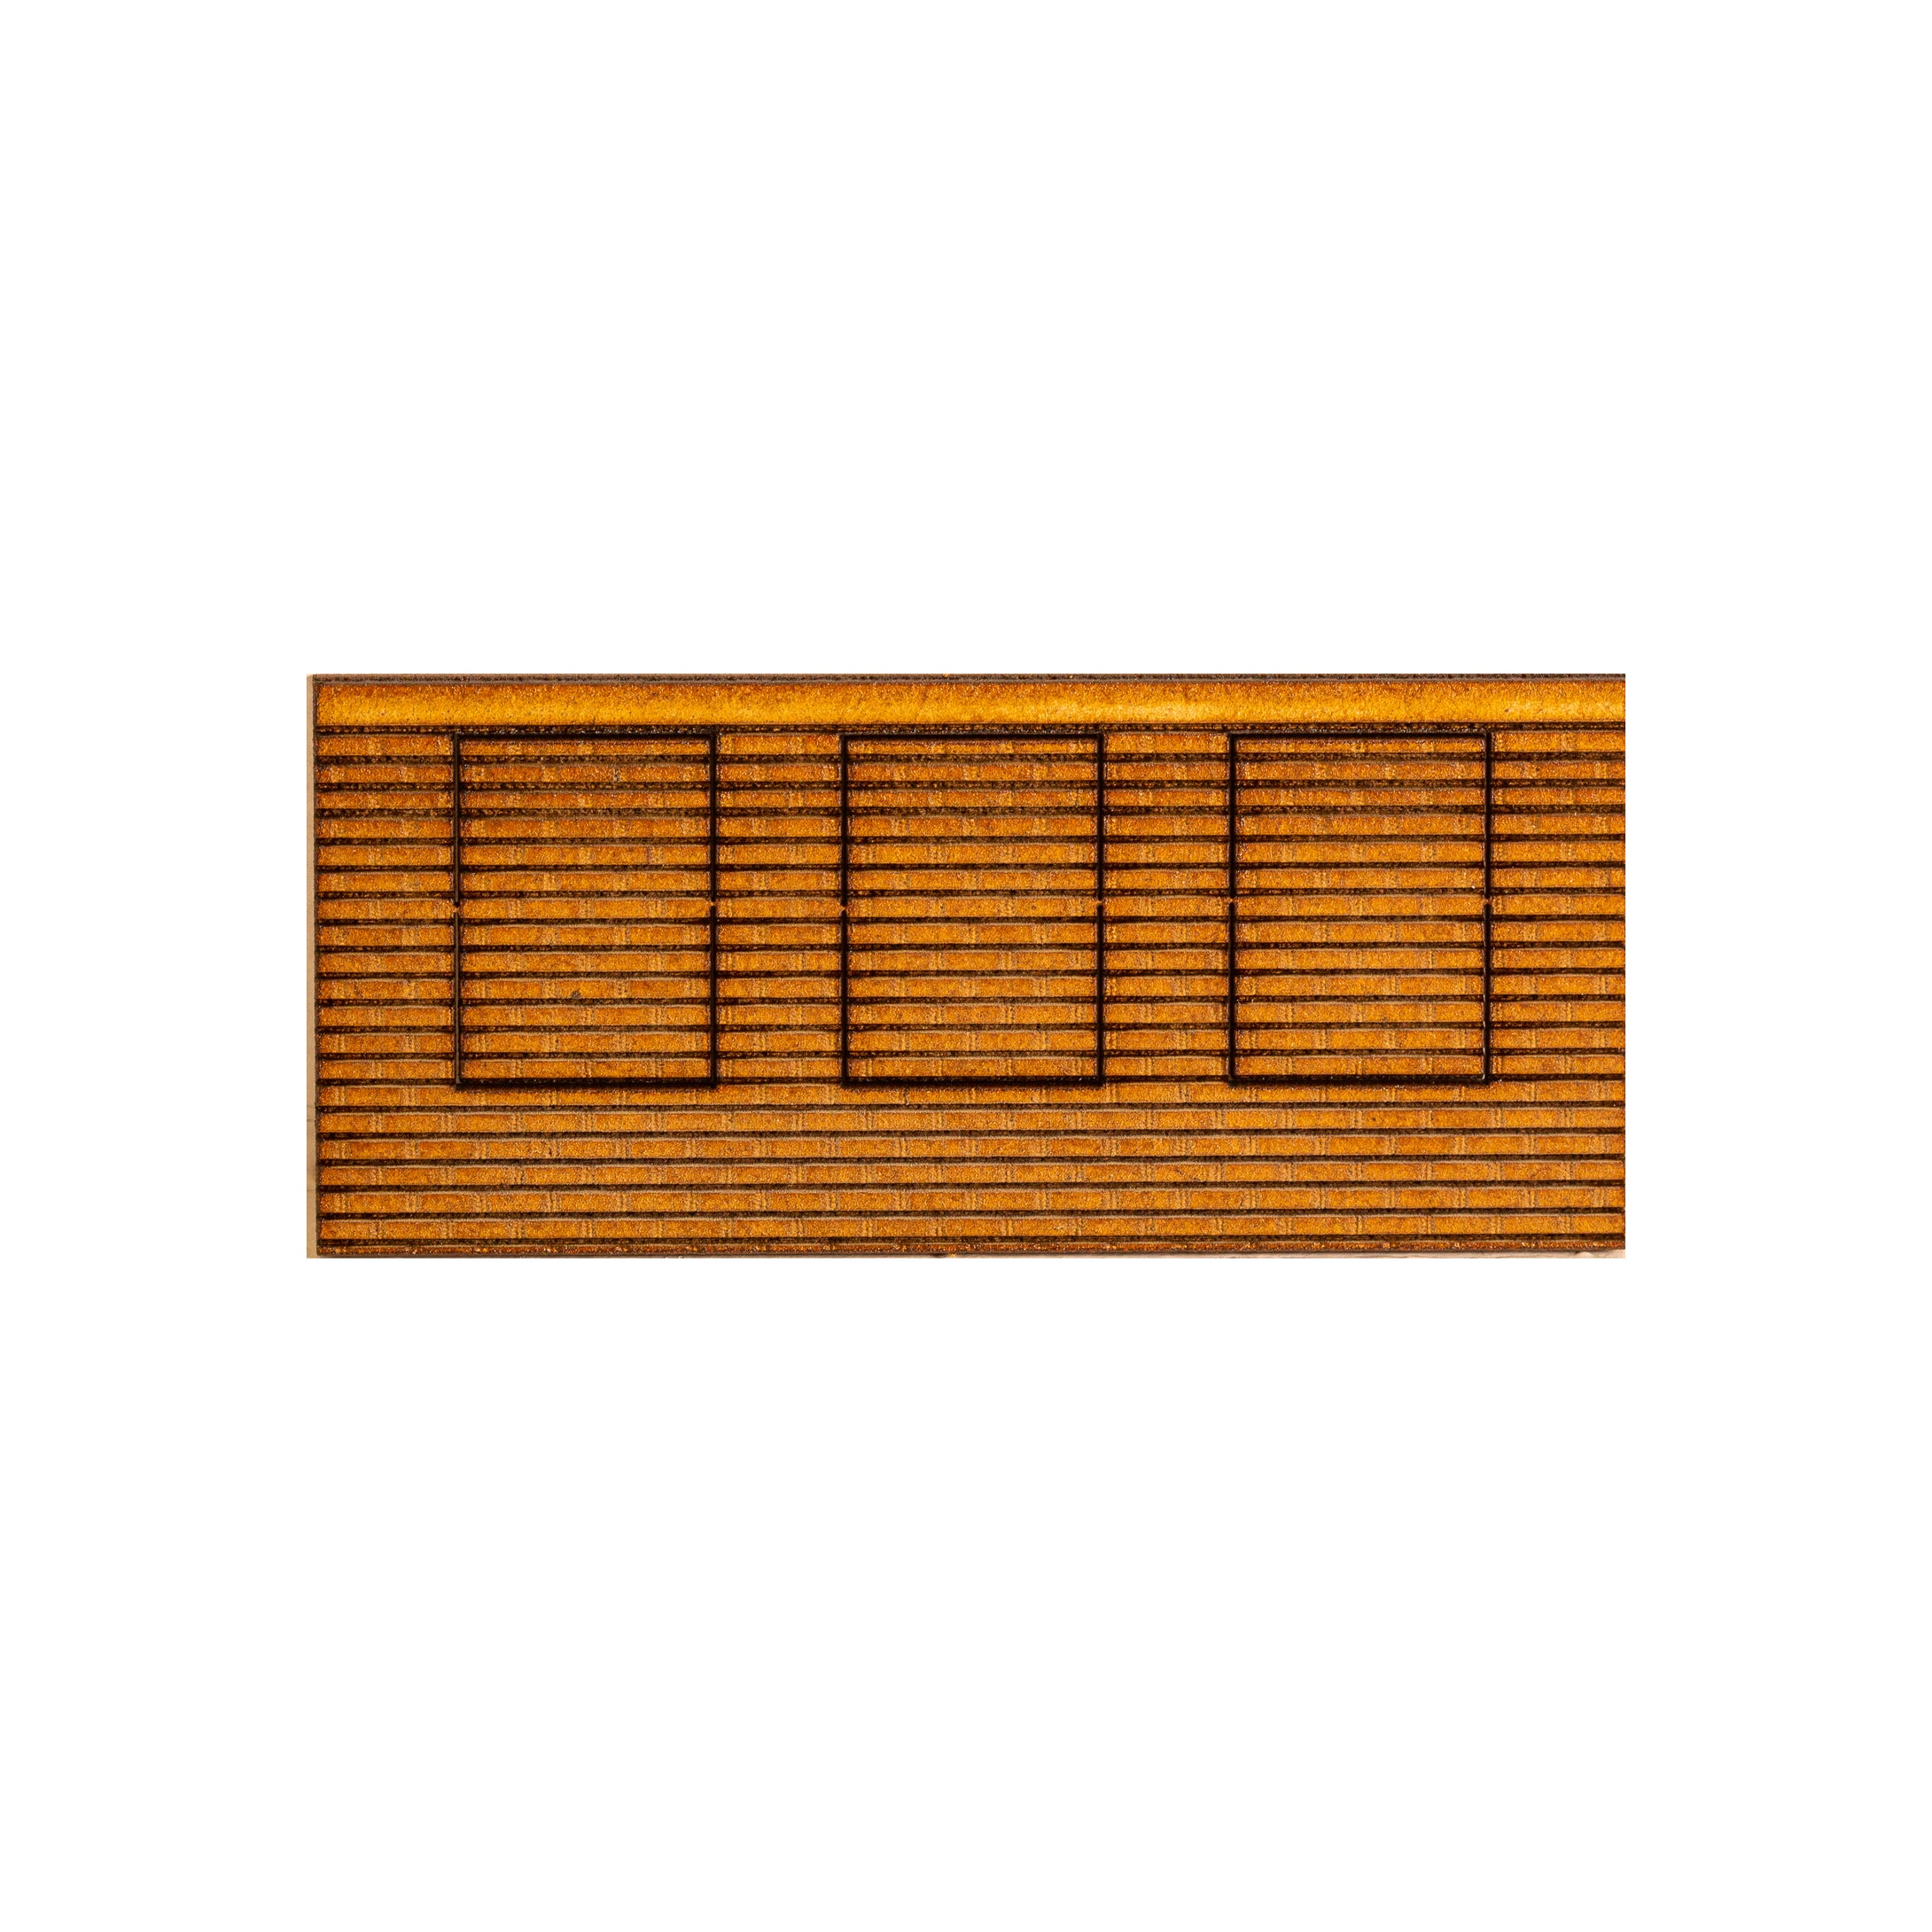 LP029 - HO Scale - Brick panel insert 3 window openings - fits opening size B